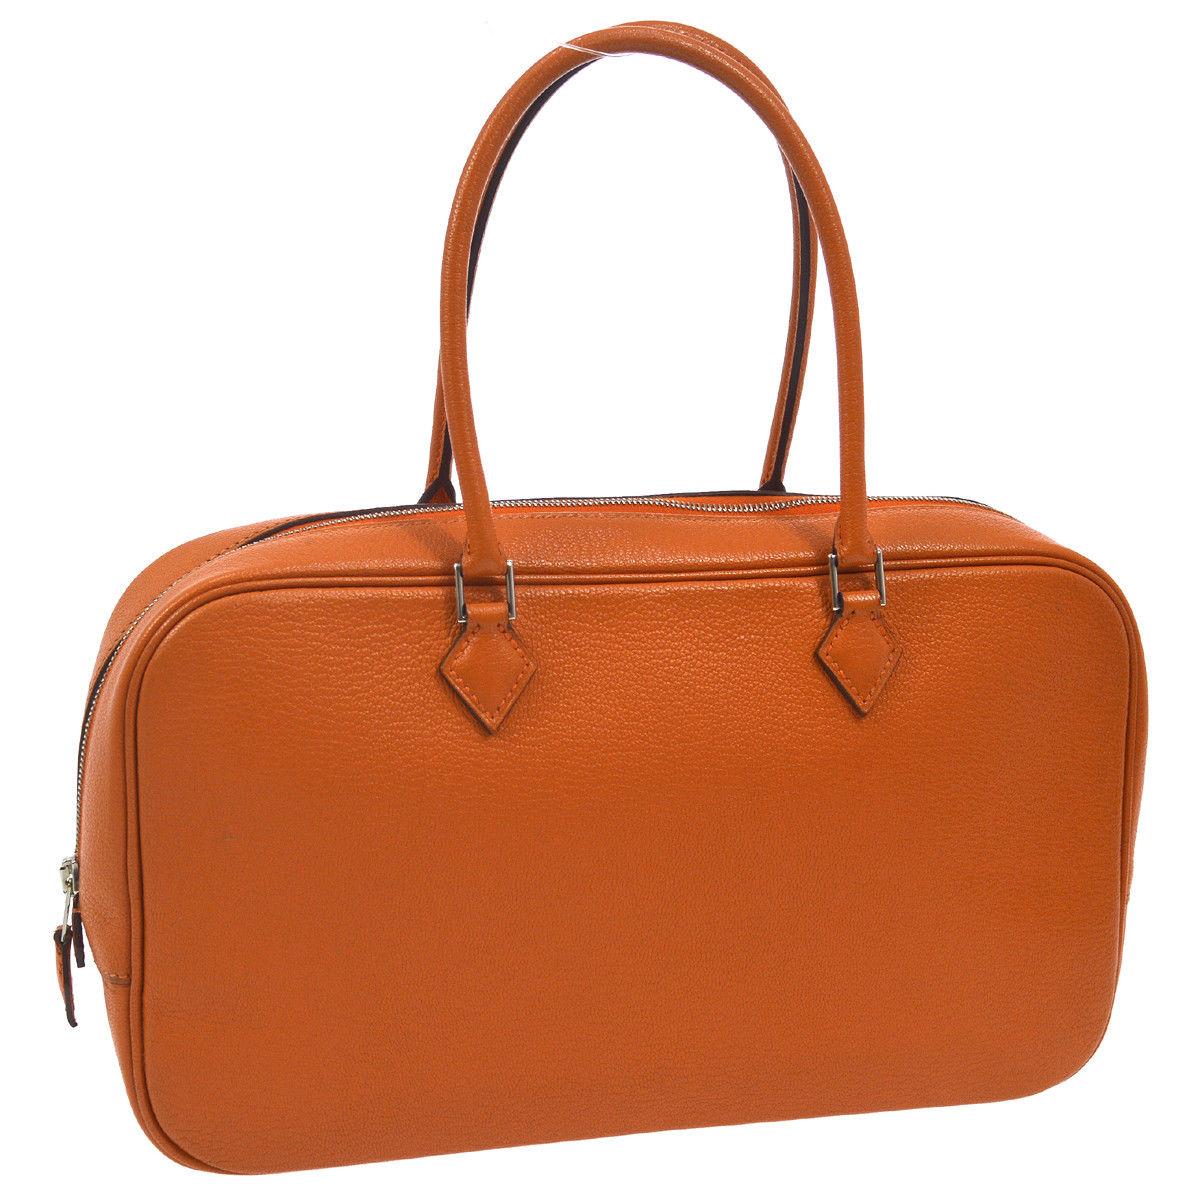 Hermes Orange Leather Silver Small Carryall Top Handle Satchel Bag 